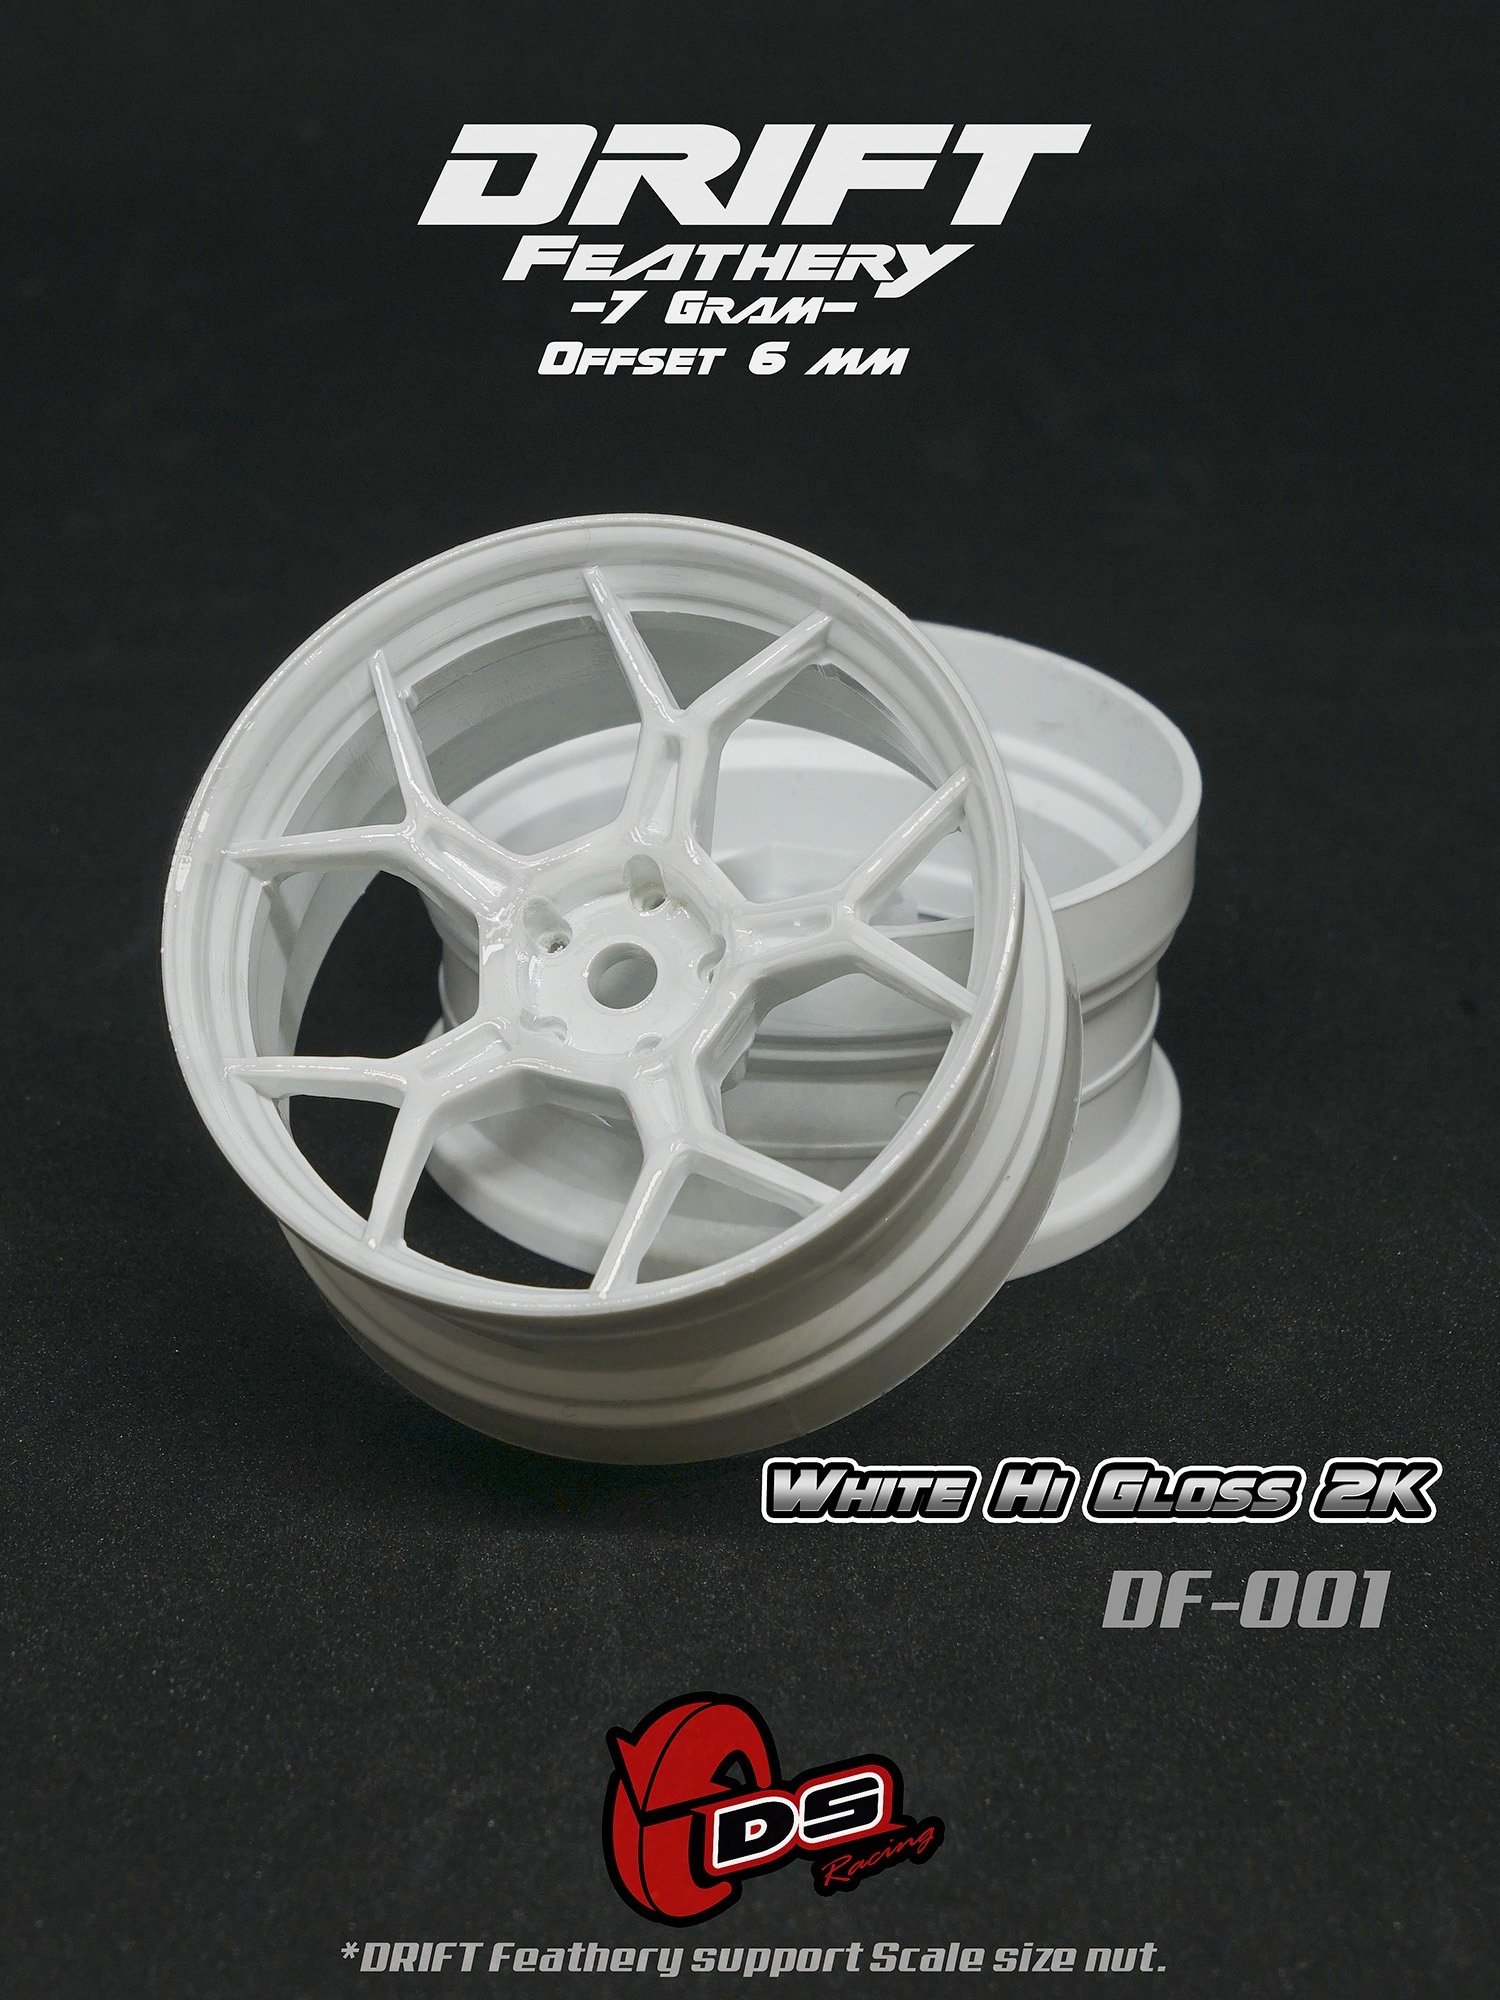 DS Racing Drift Feathery Wheel (2pcs) White Hi Gloss 2K +6mm offset – DF-001